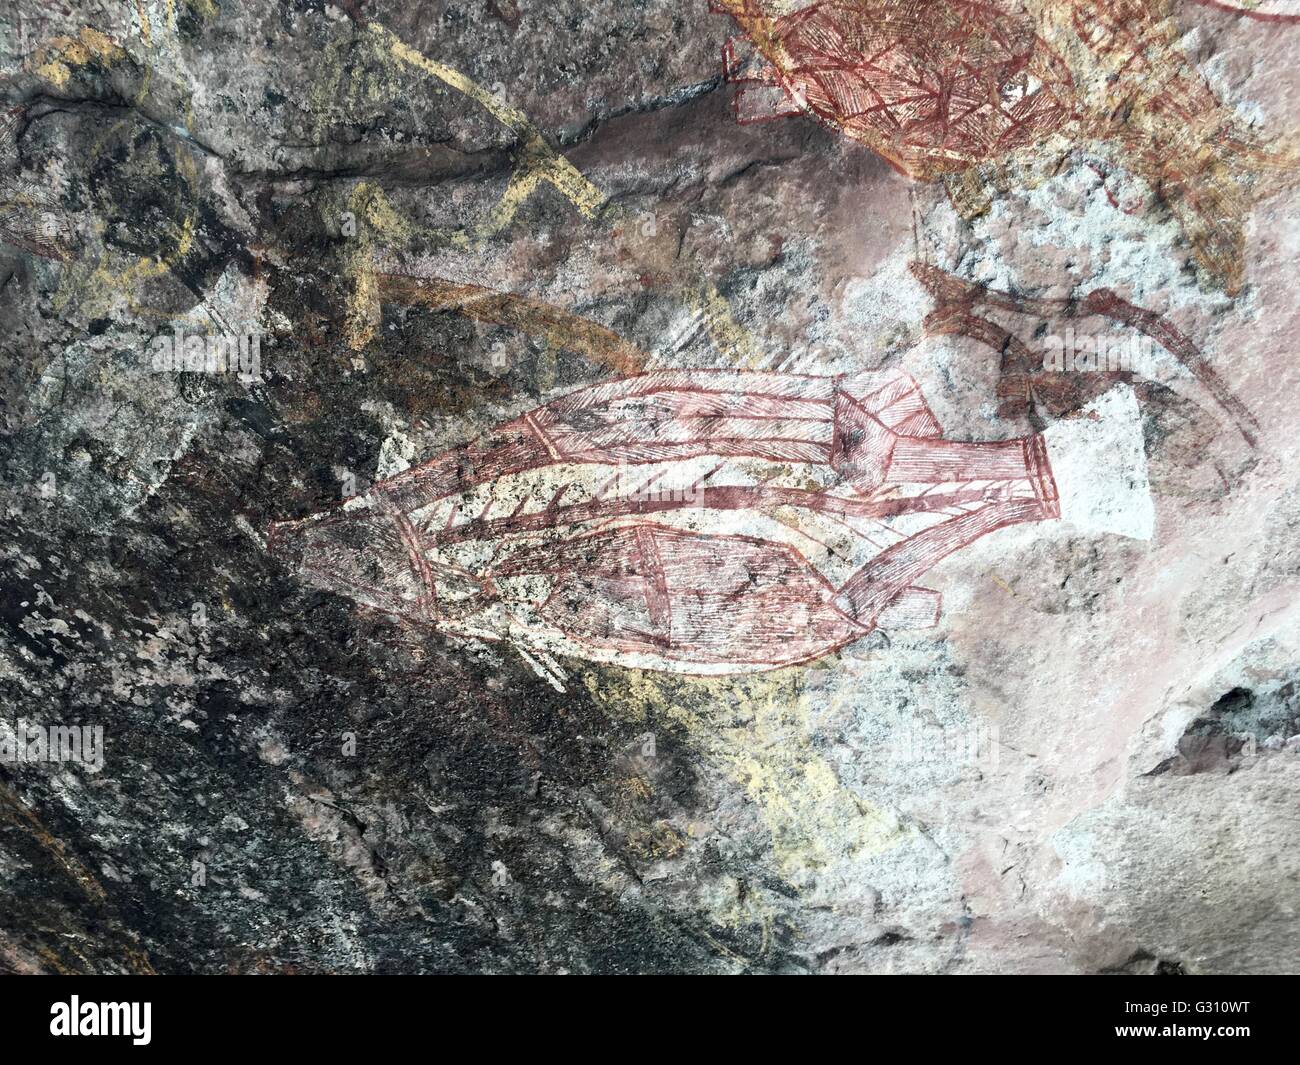 Aboriginal cave paintings at Injalak Hill at Gunbalanya (Oenpelli) in West Arnhem Land, Northern Territory, Australia Stock Photo